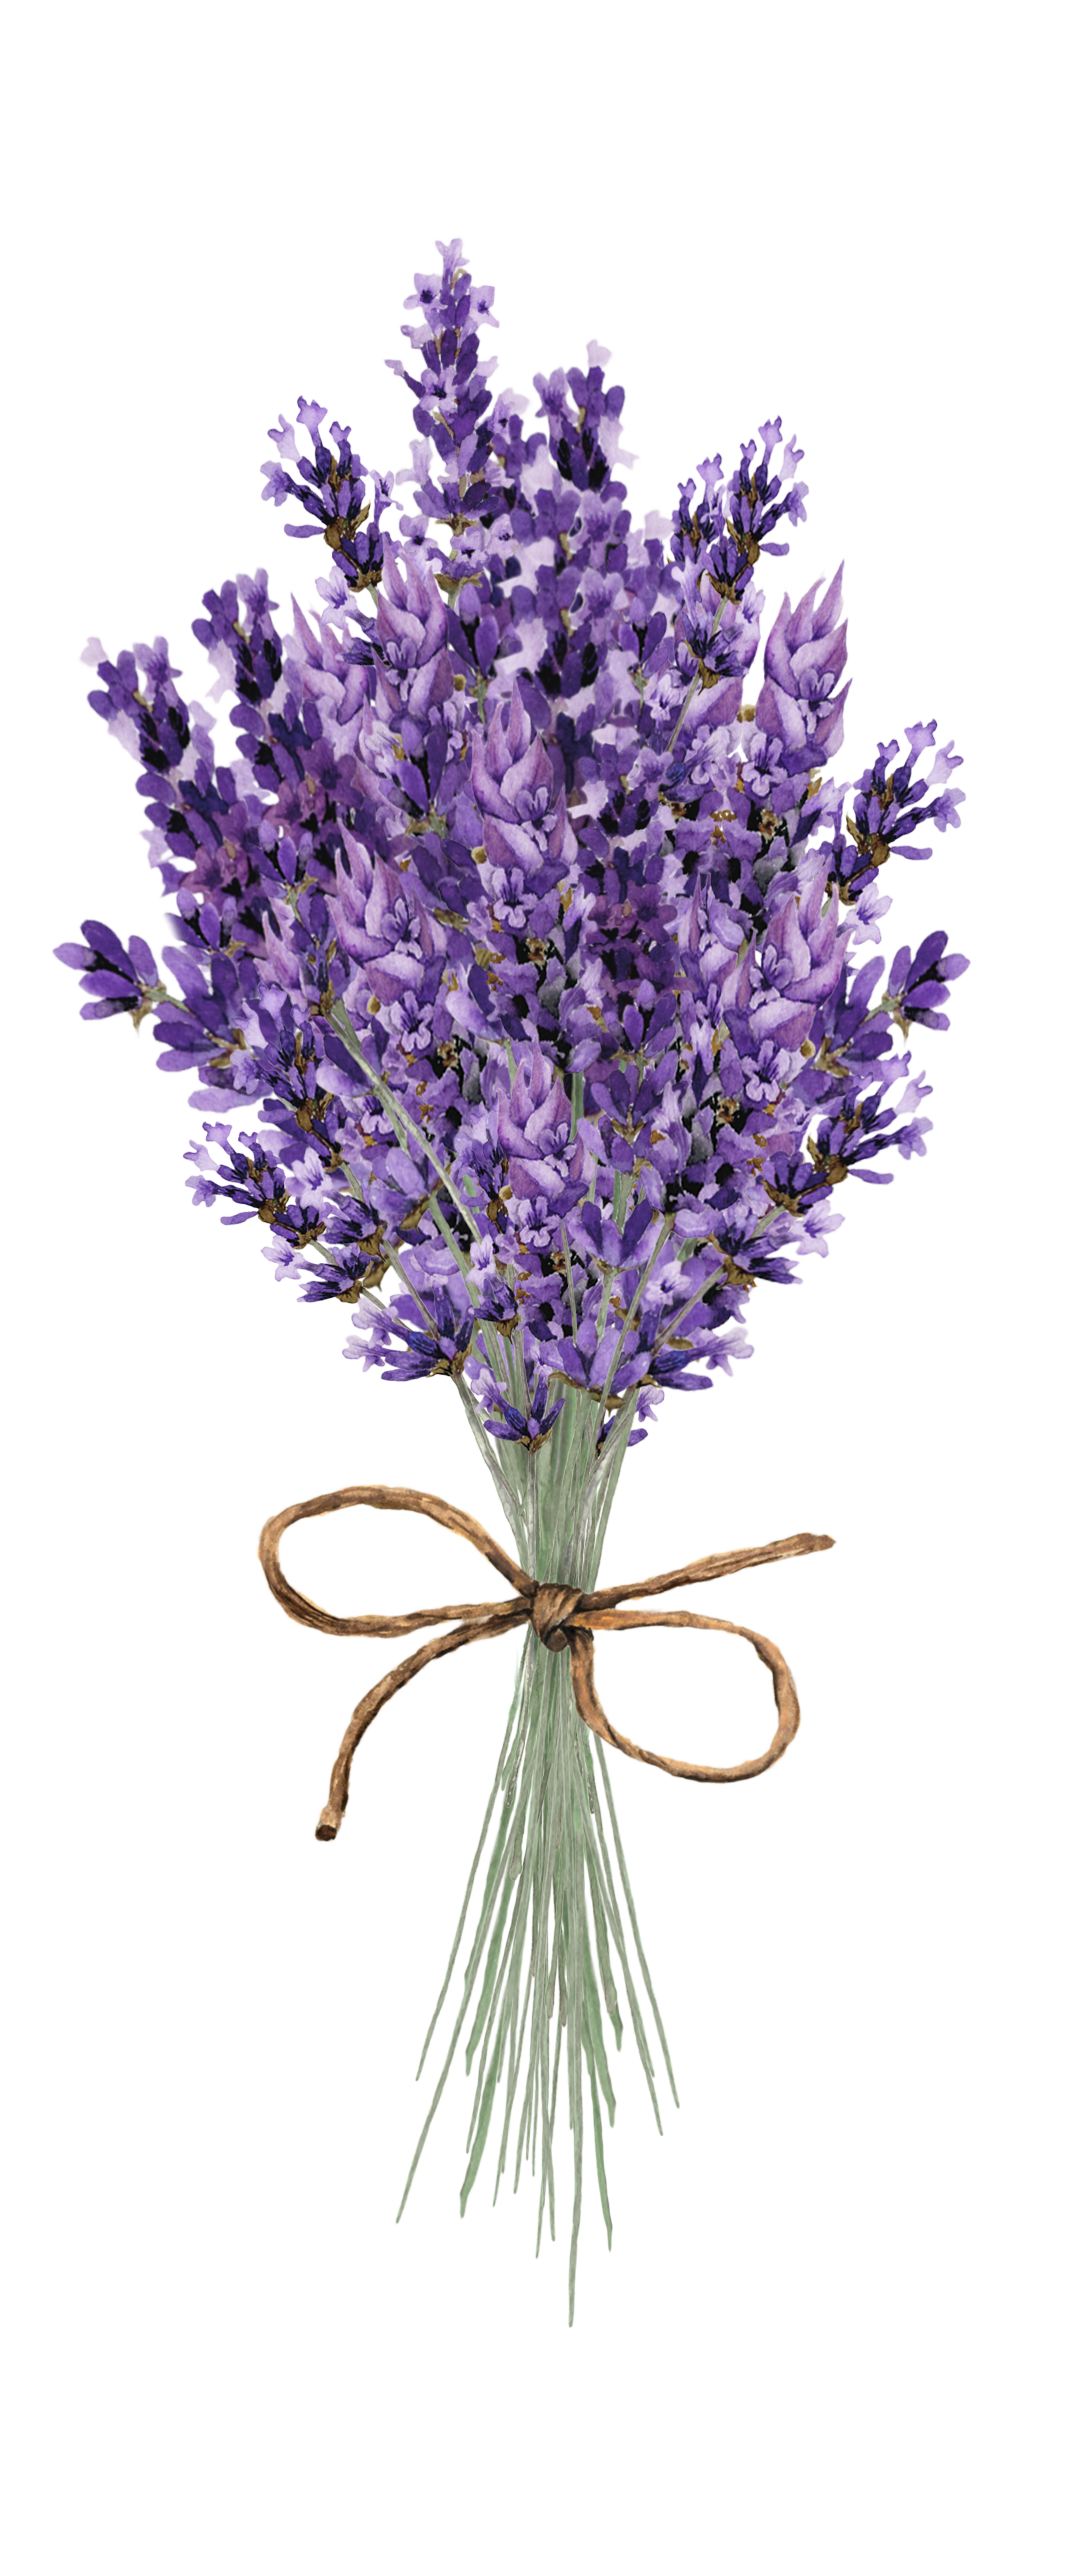 Lavender clipart lavender field, Lavender lavender field Transparent